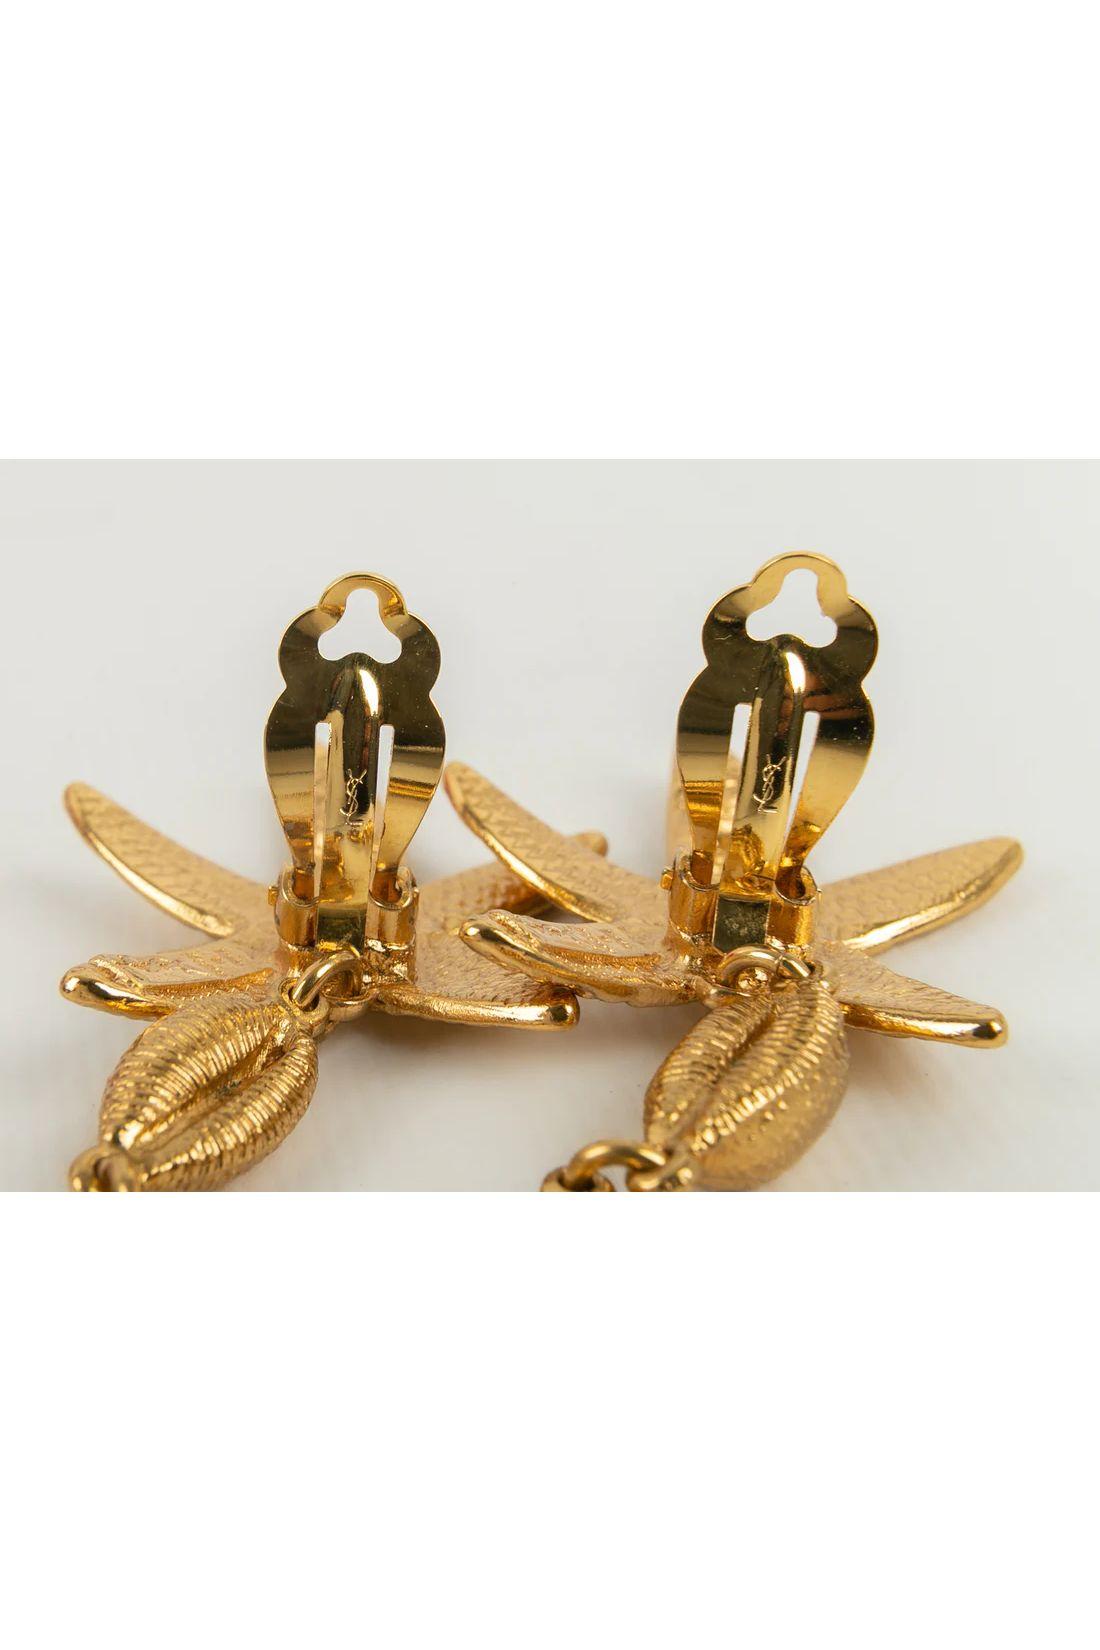 Artist Yves Saint Laurent Earrings in Gold Metal and Green Enamel For Sale